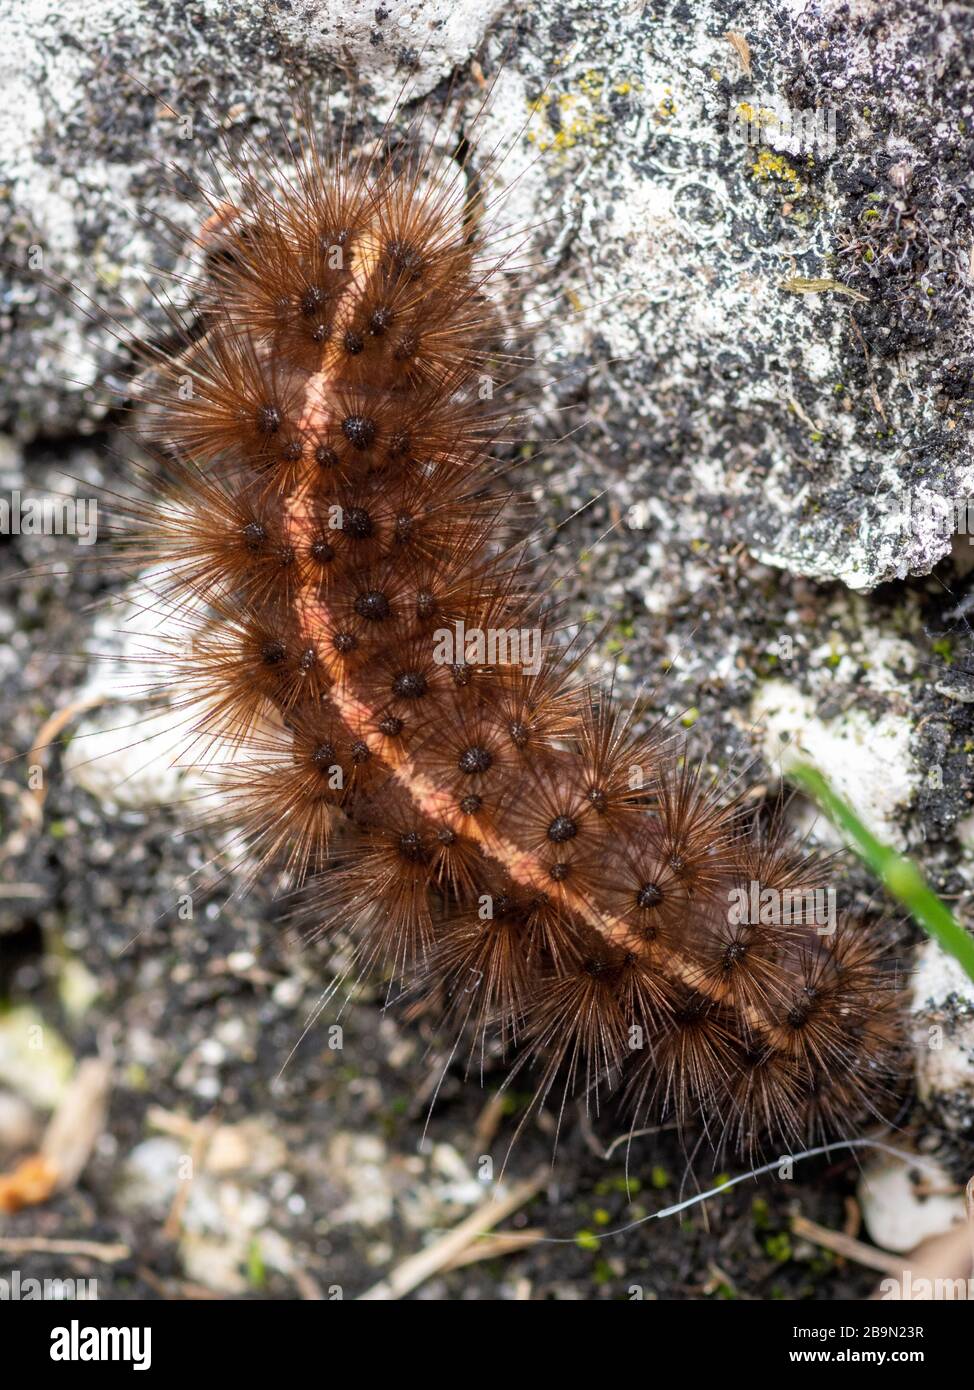 Peloso Molly Caterpillar Foto Stock